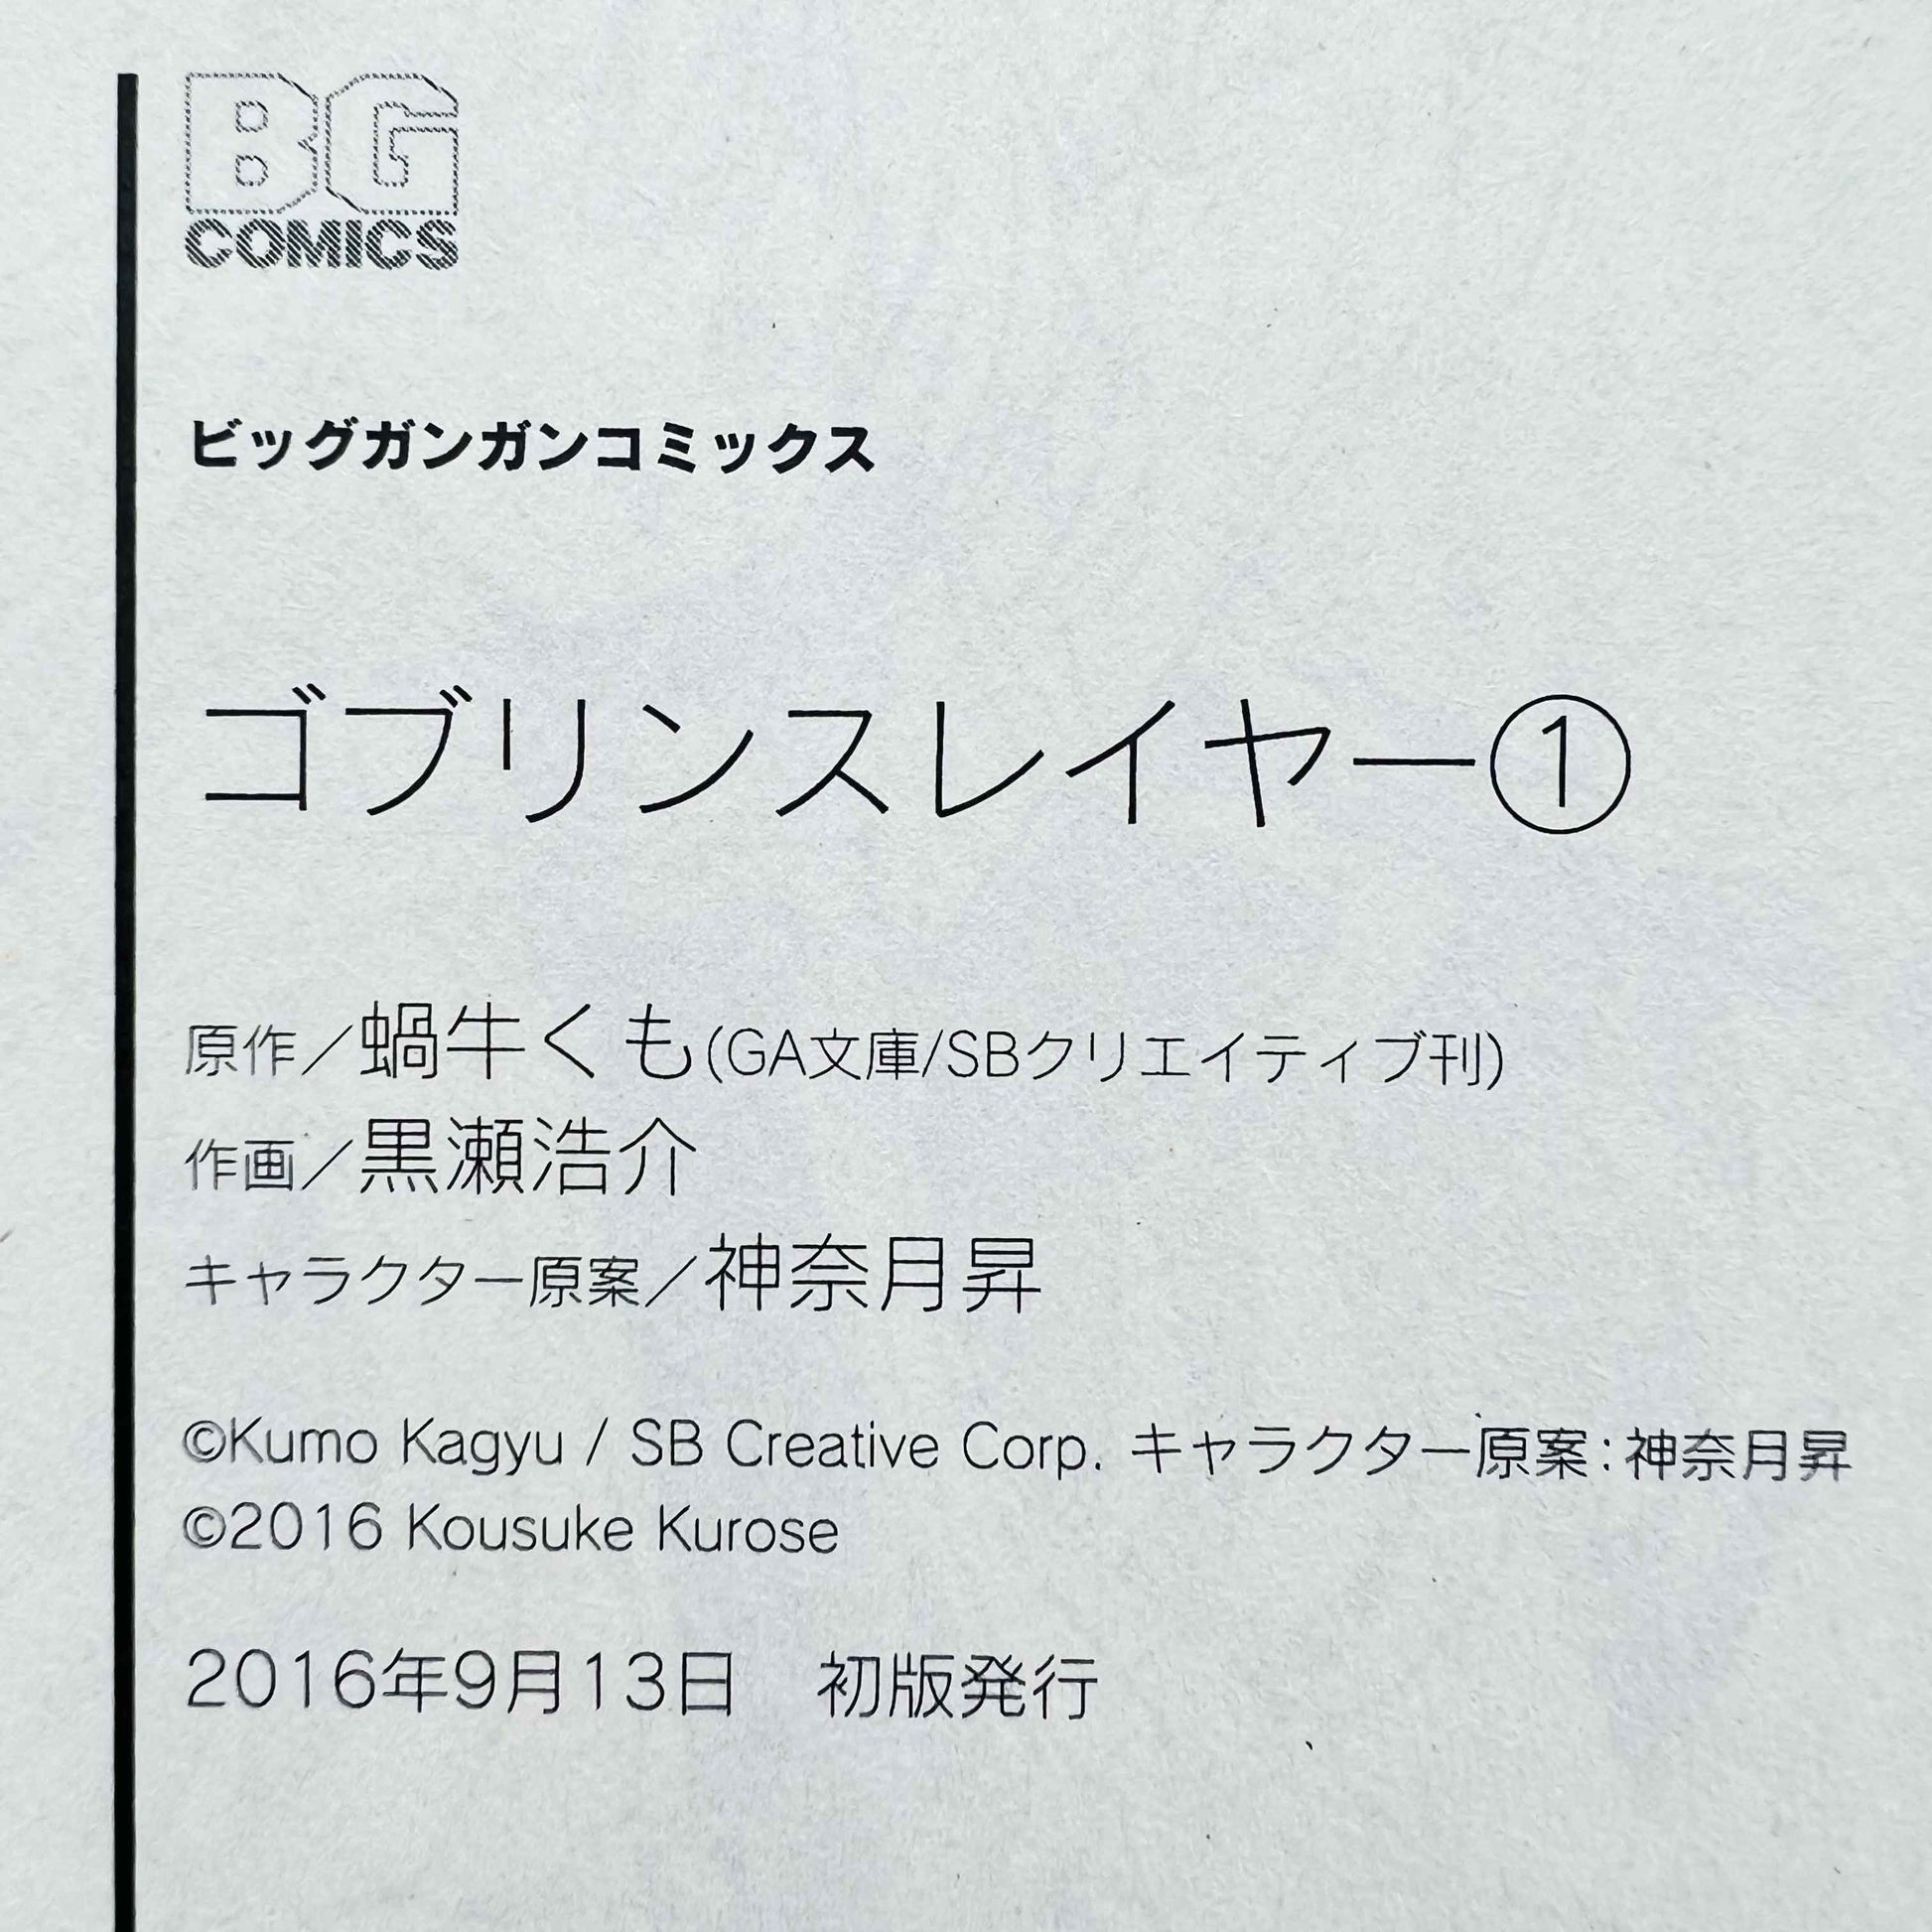 Goblin Slayer - Volume 01 - 1stPrint.net - 1st First Print Edition Manga Store - M-GOBSLAY-01-001